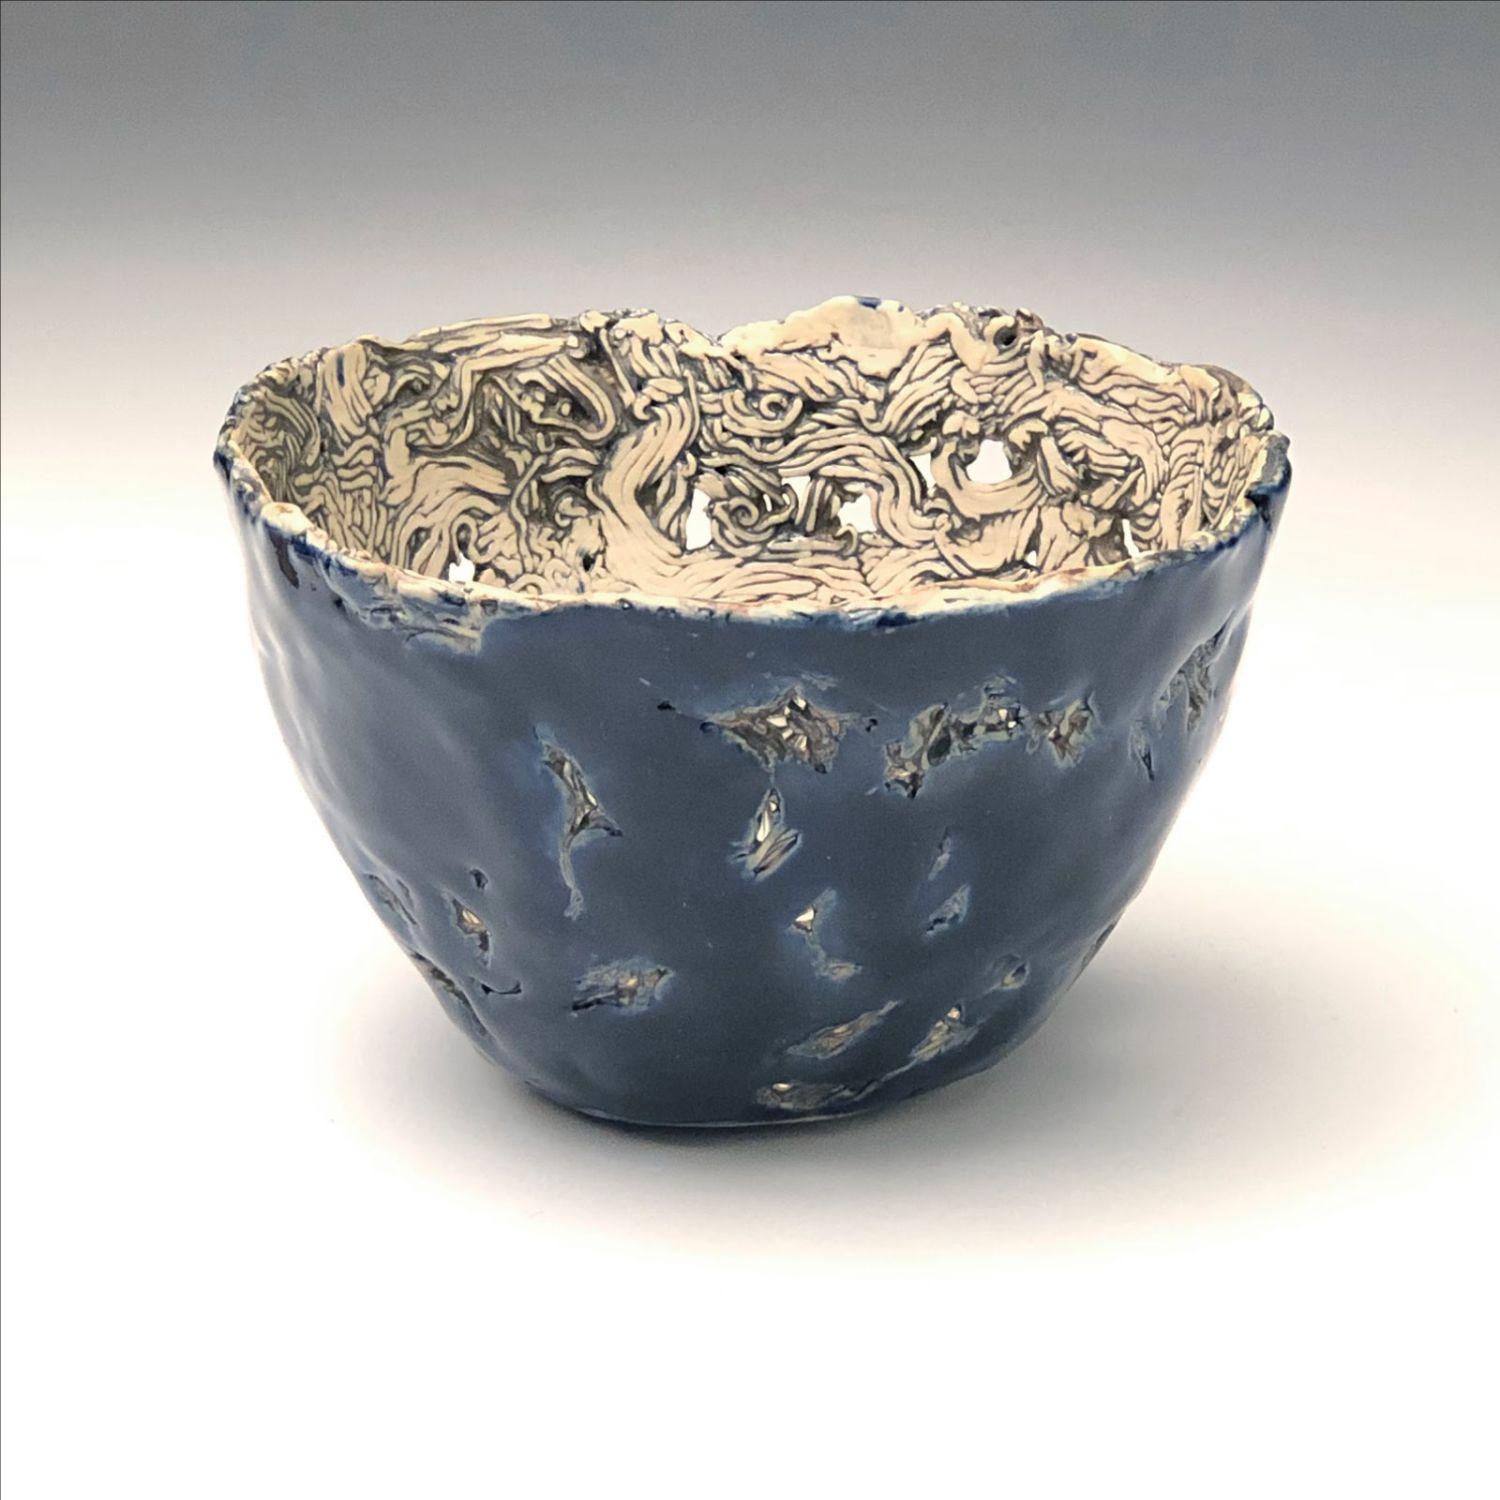 Audrey Mah: Blue Bowl Product Image 1 of 2